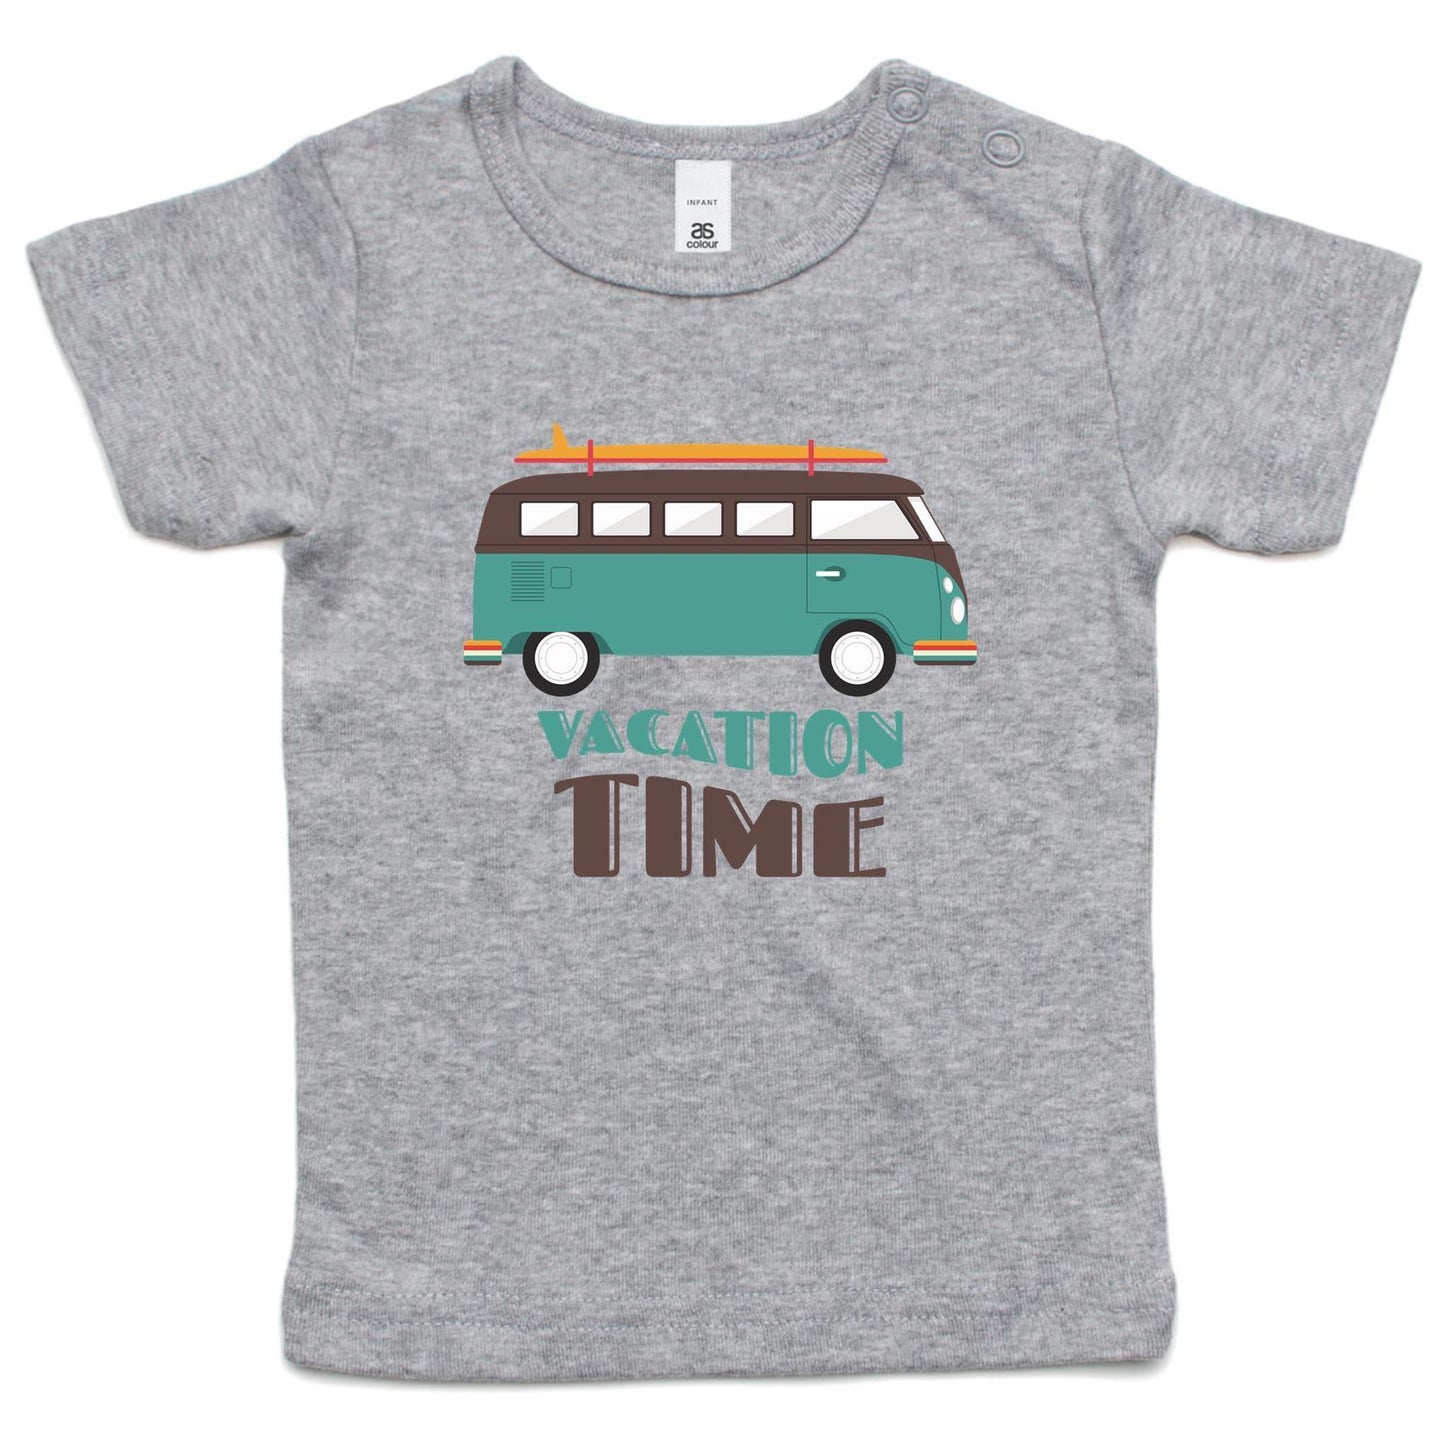 Vacation Time - Baby T-shirt Grey Marle Baby T-shirt kids